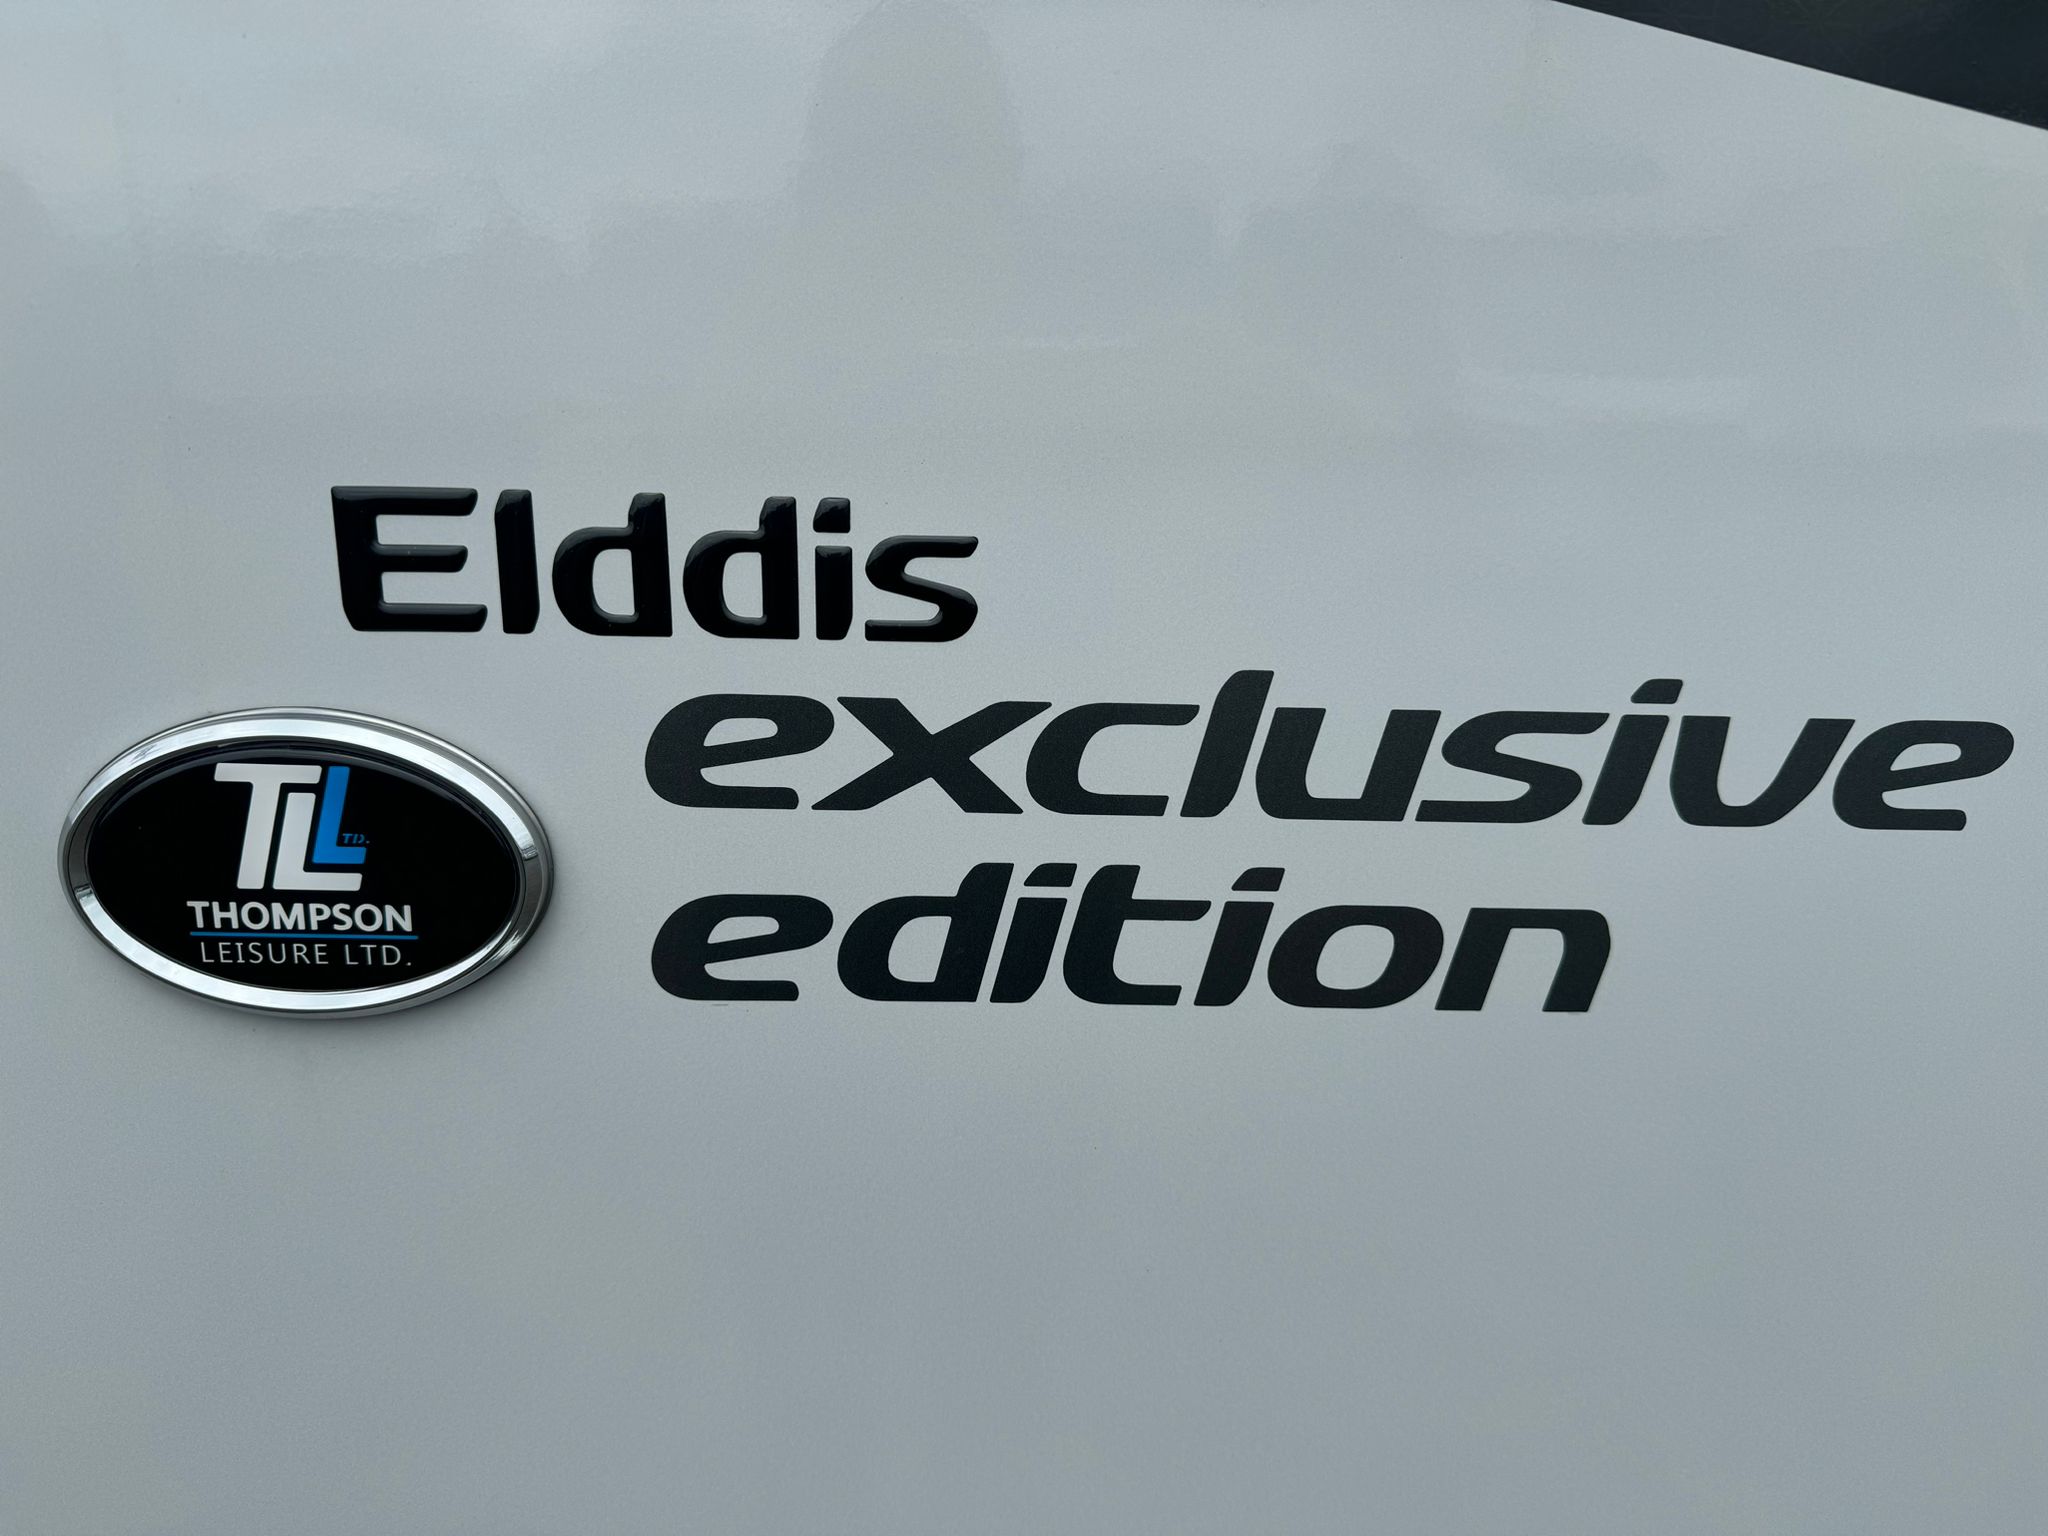 Elddis Autoquest 150 TLL Exclusive Edition - Manual